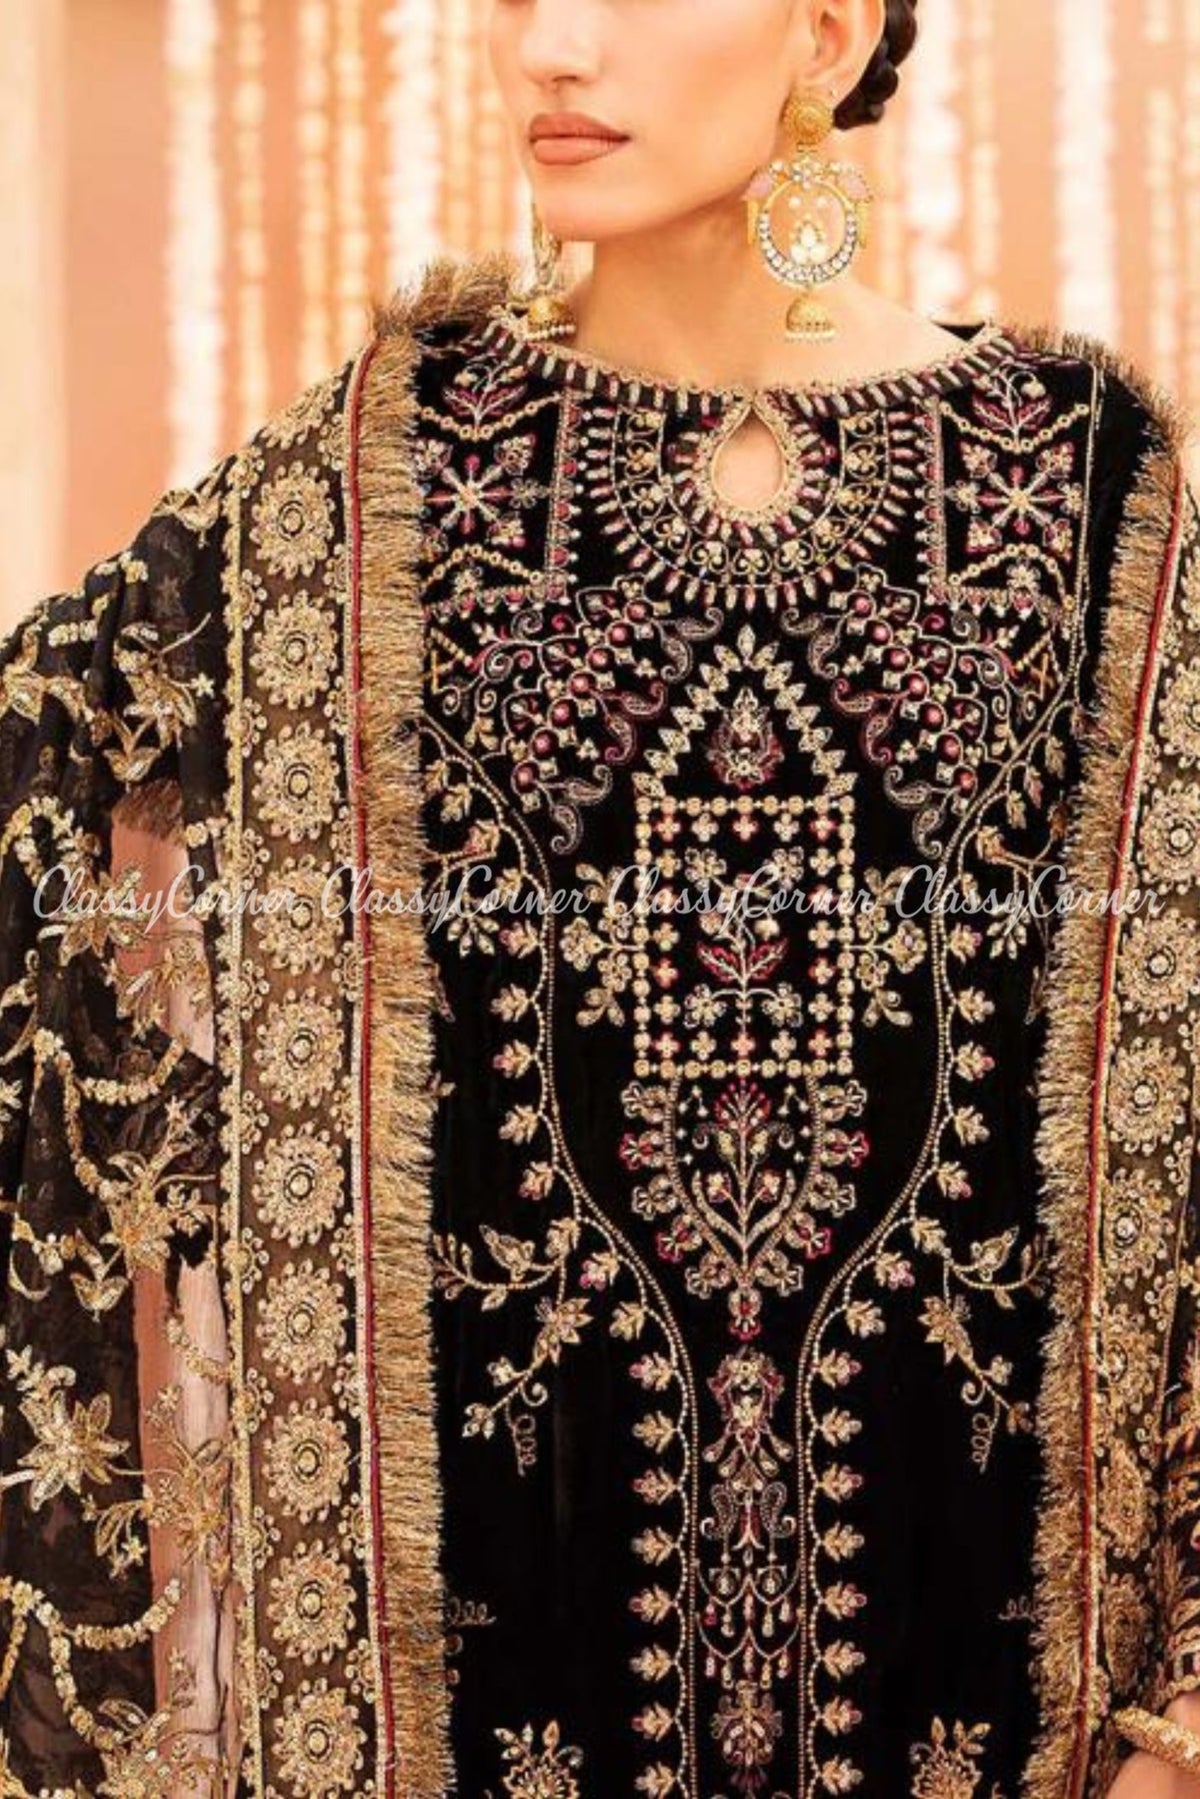 Traditional Pakistani wedding outfits Sydney